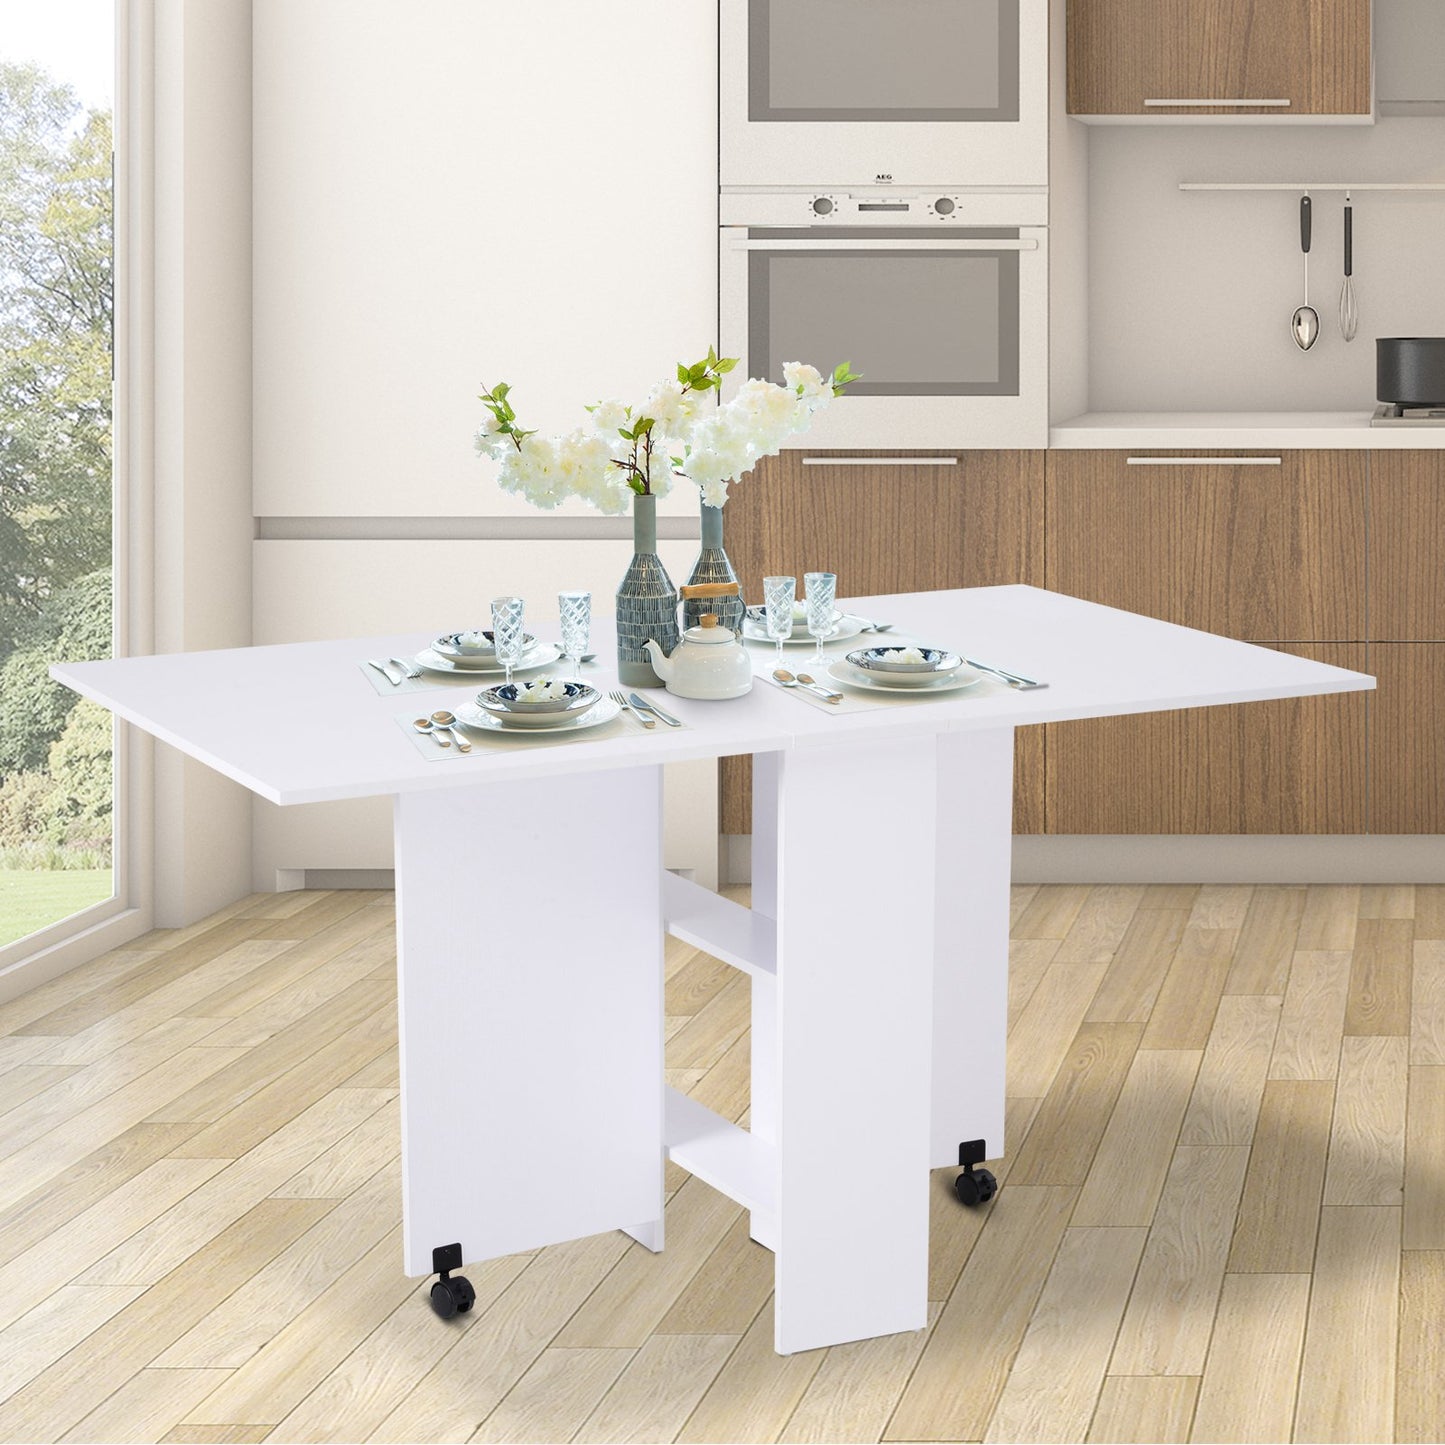 HOMCOM Mobile Drop Leaf Kitchen Dining Table W/ 2 Wheels,  Storage Shelves-White Wood Grain